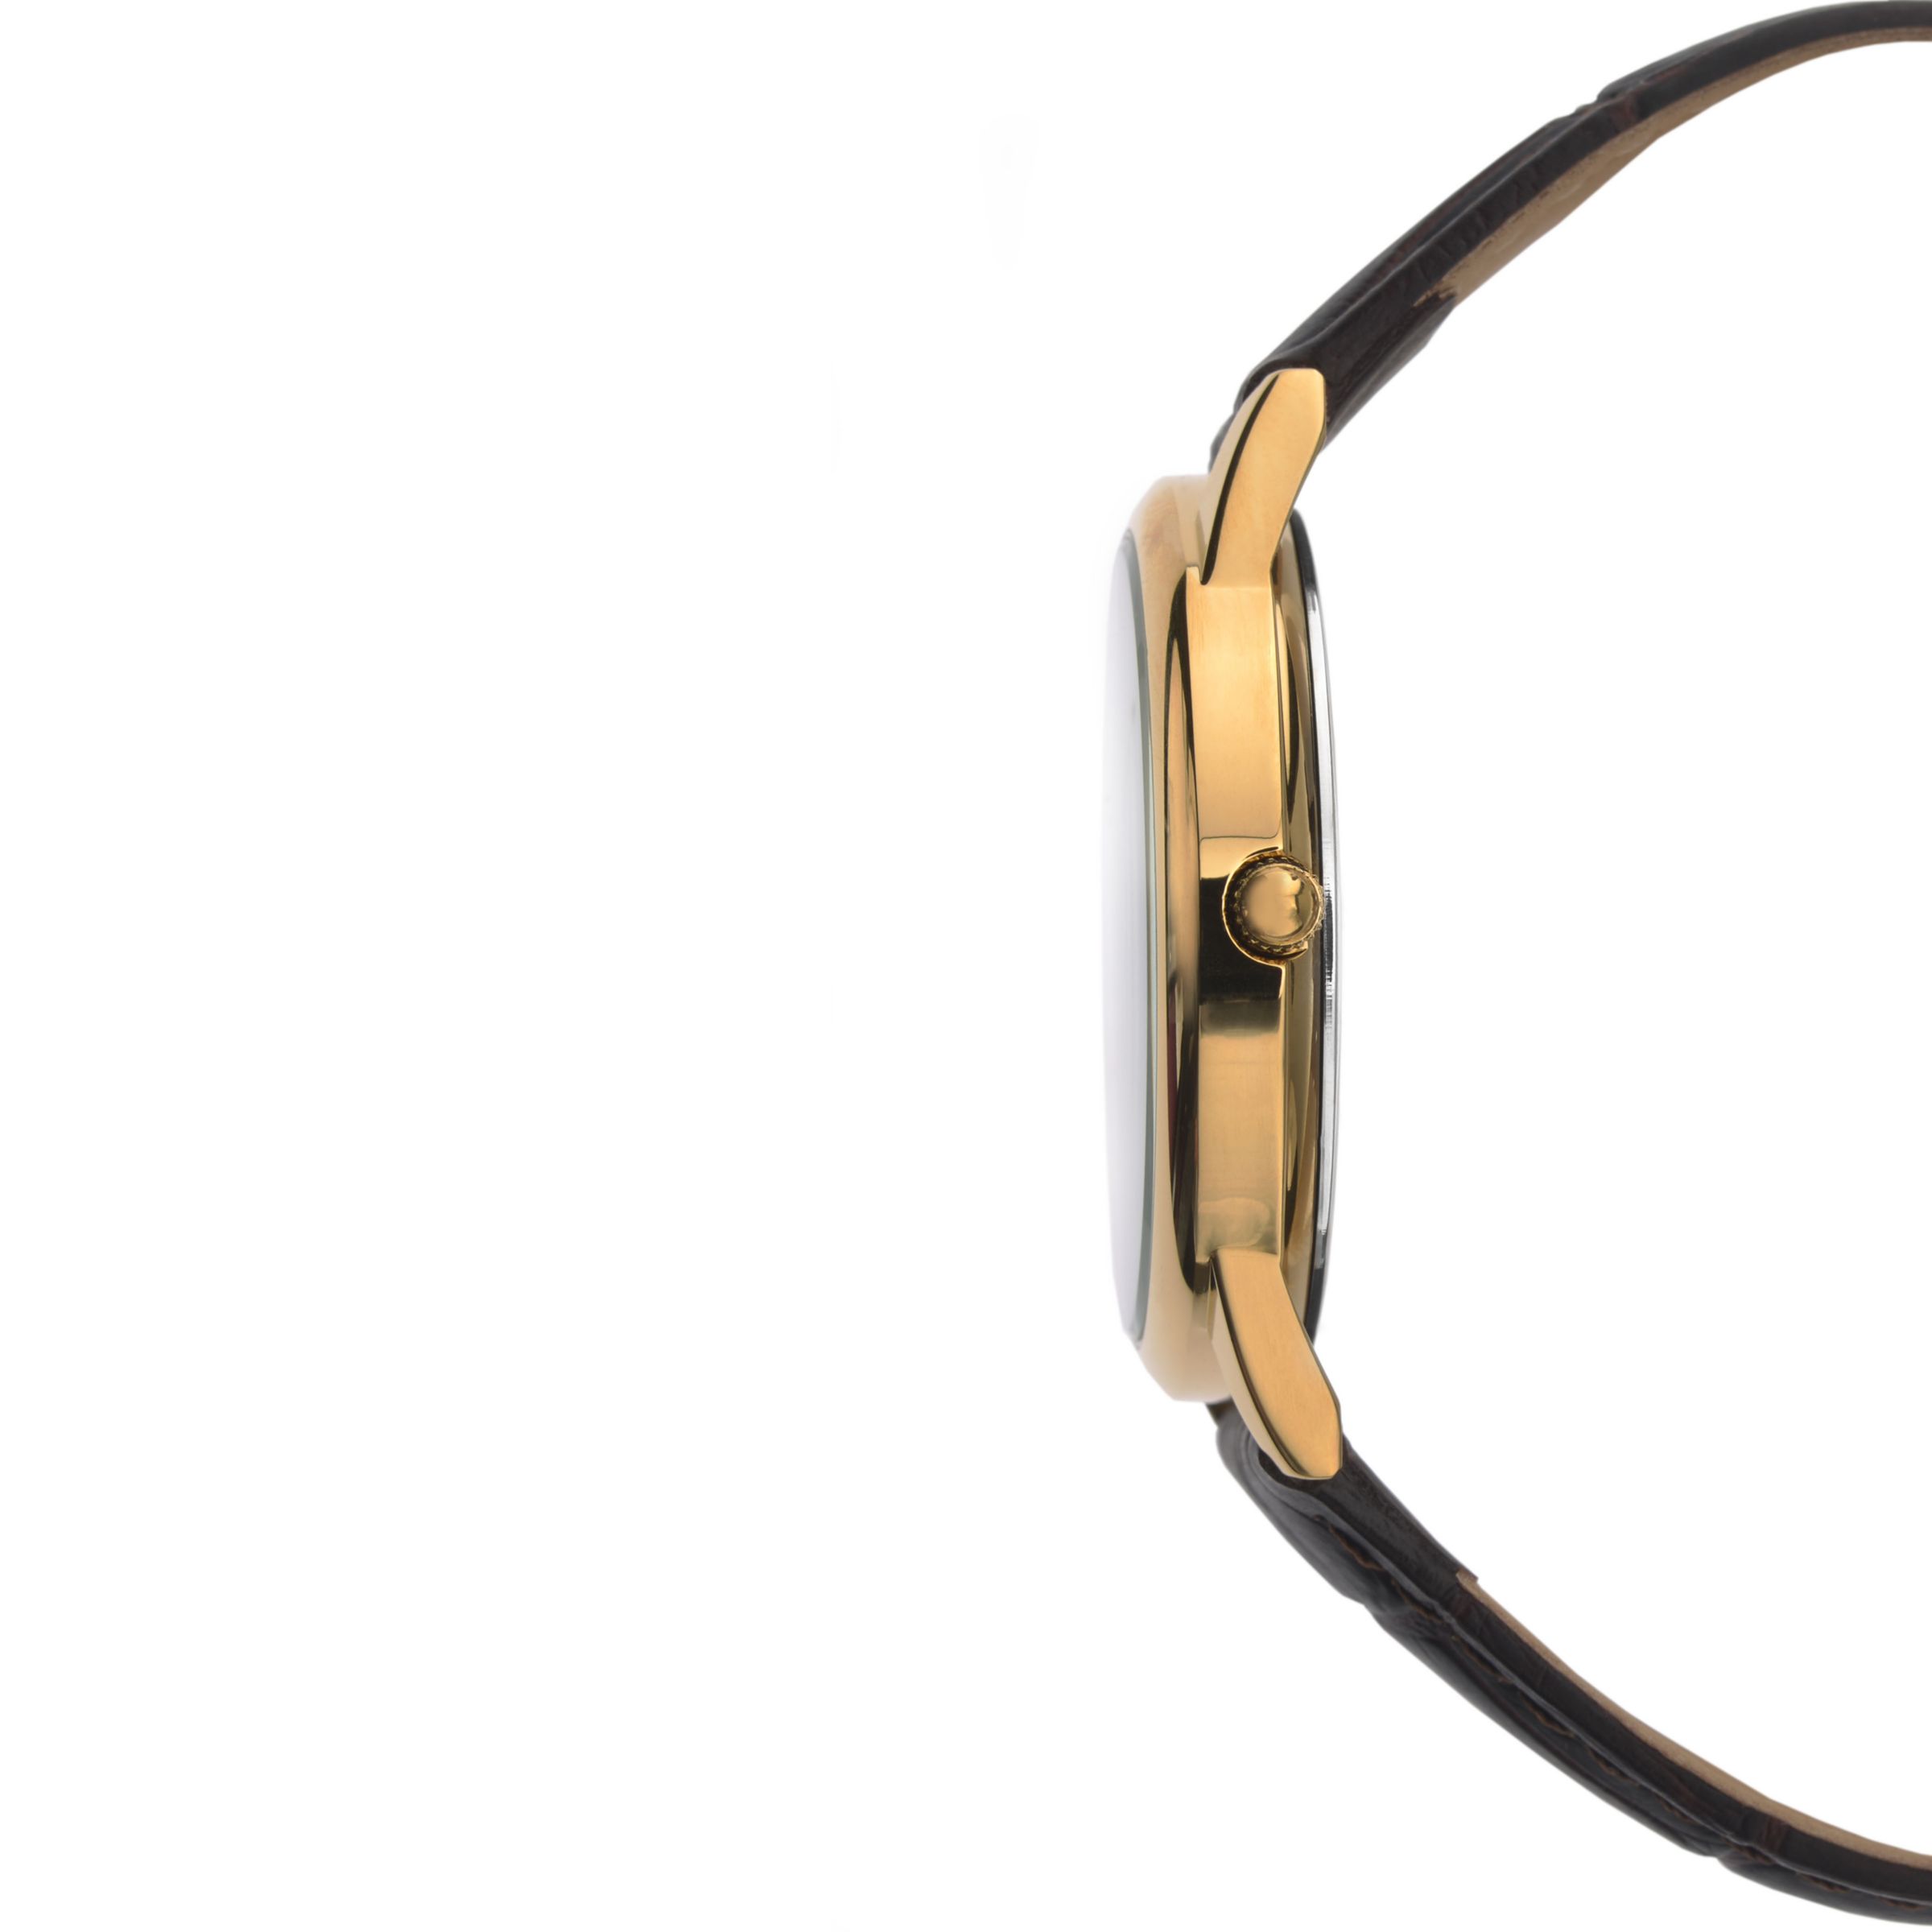 Buy Sekonda 3676.27 Men's Date Dial Leather Strap Watch, Brown/White Online at johnlewis.com